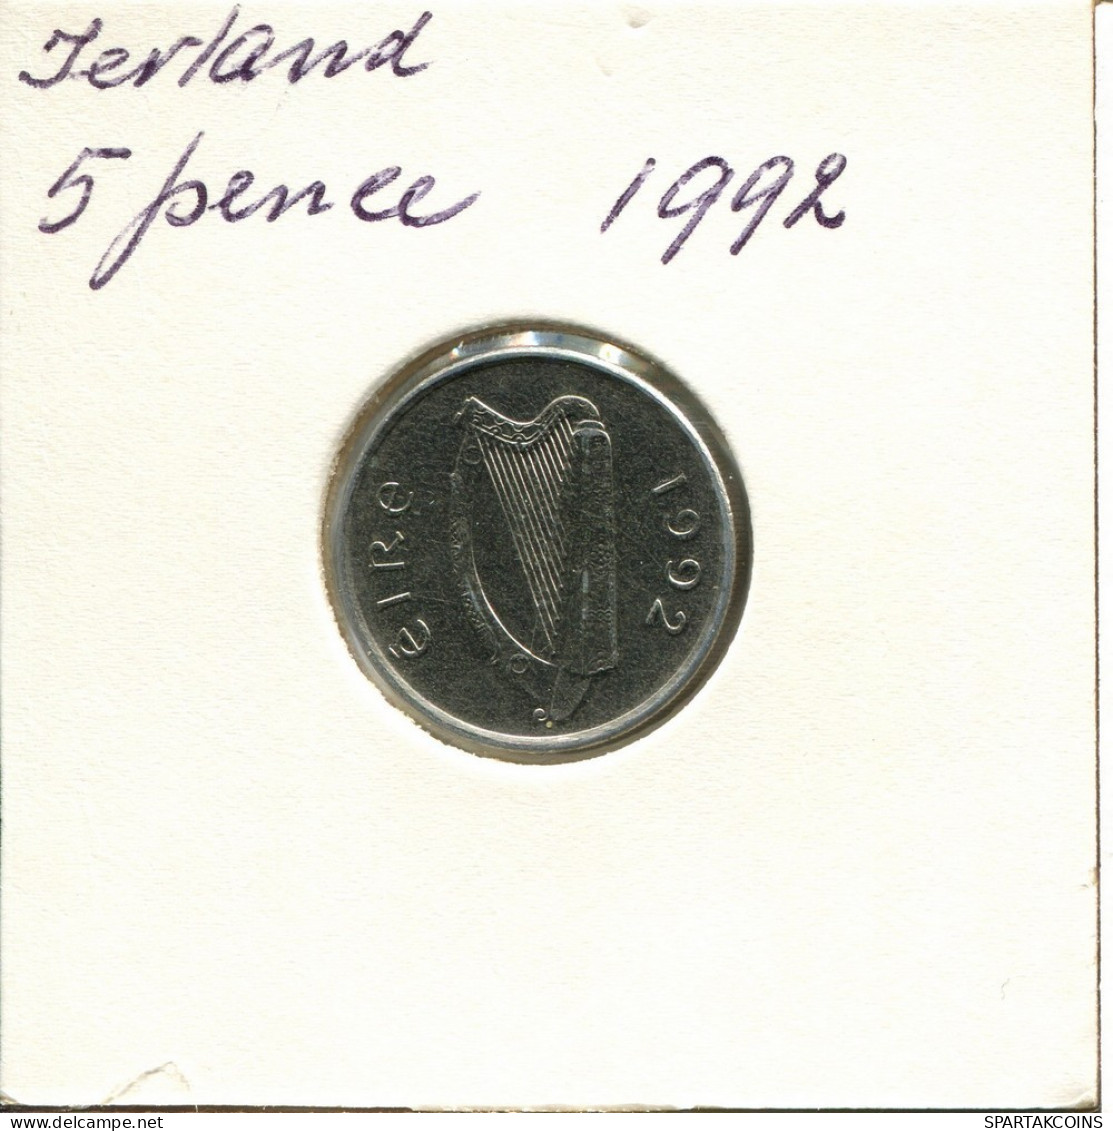 5 PENCE 1992 IRLANDA IRELAND Moneda #AY683.E.A - Irlande